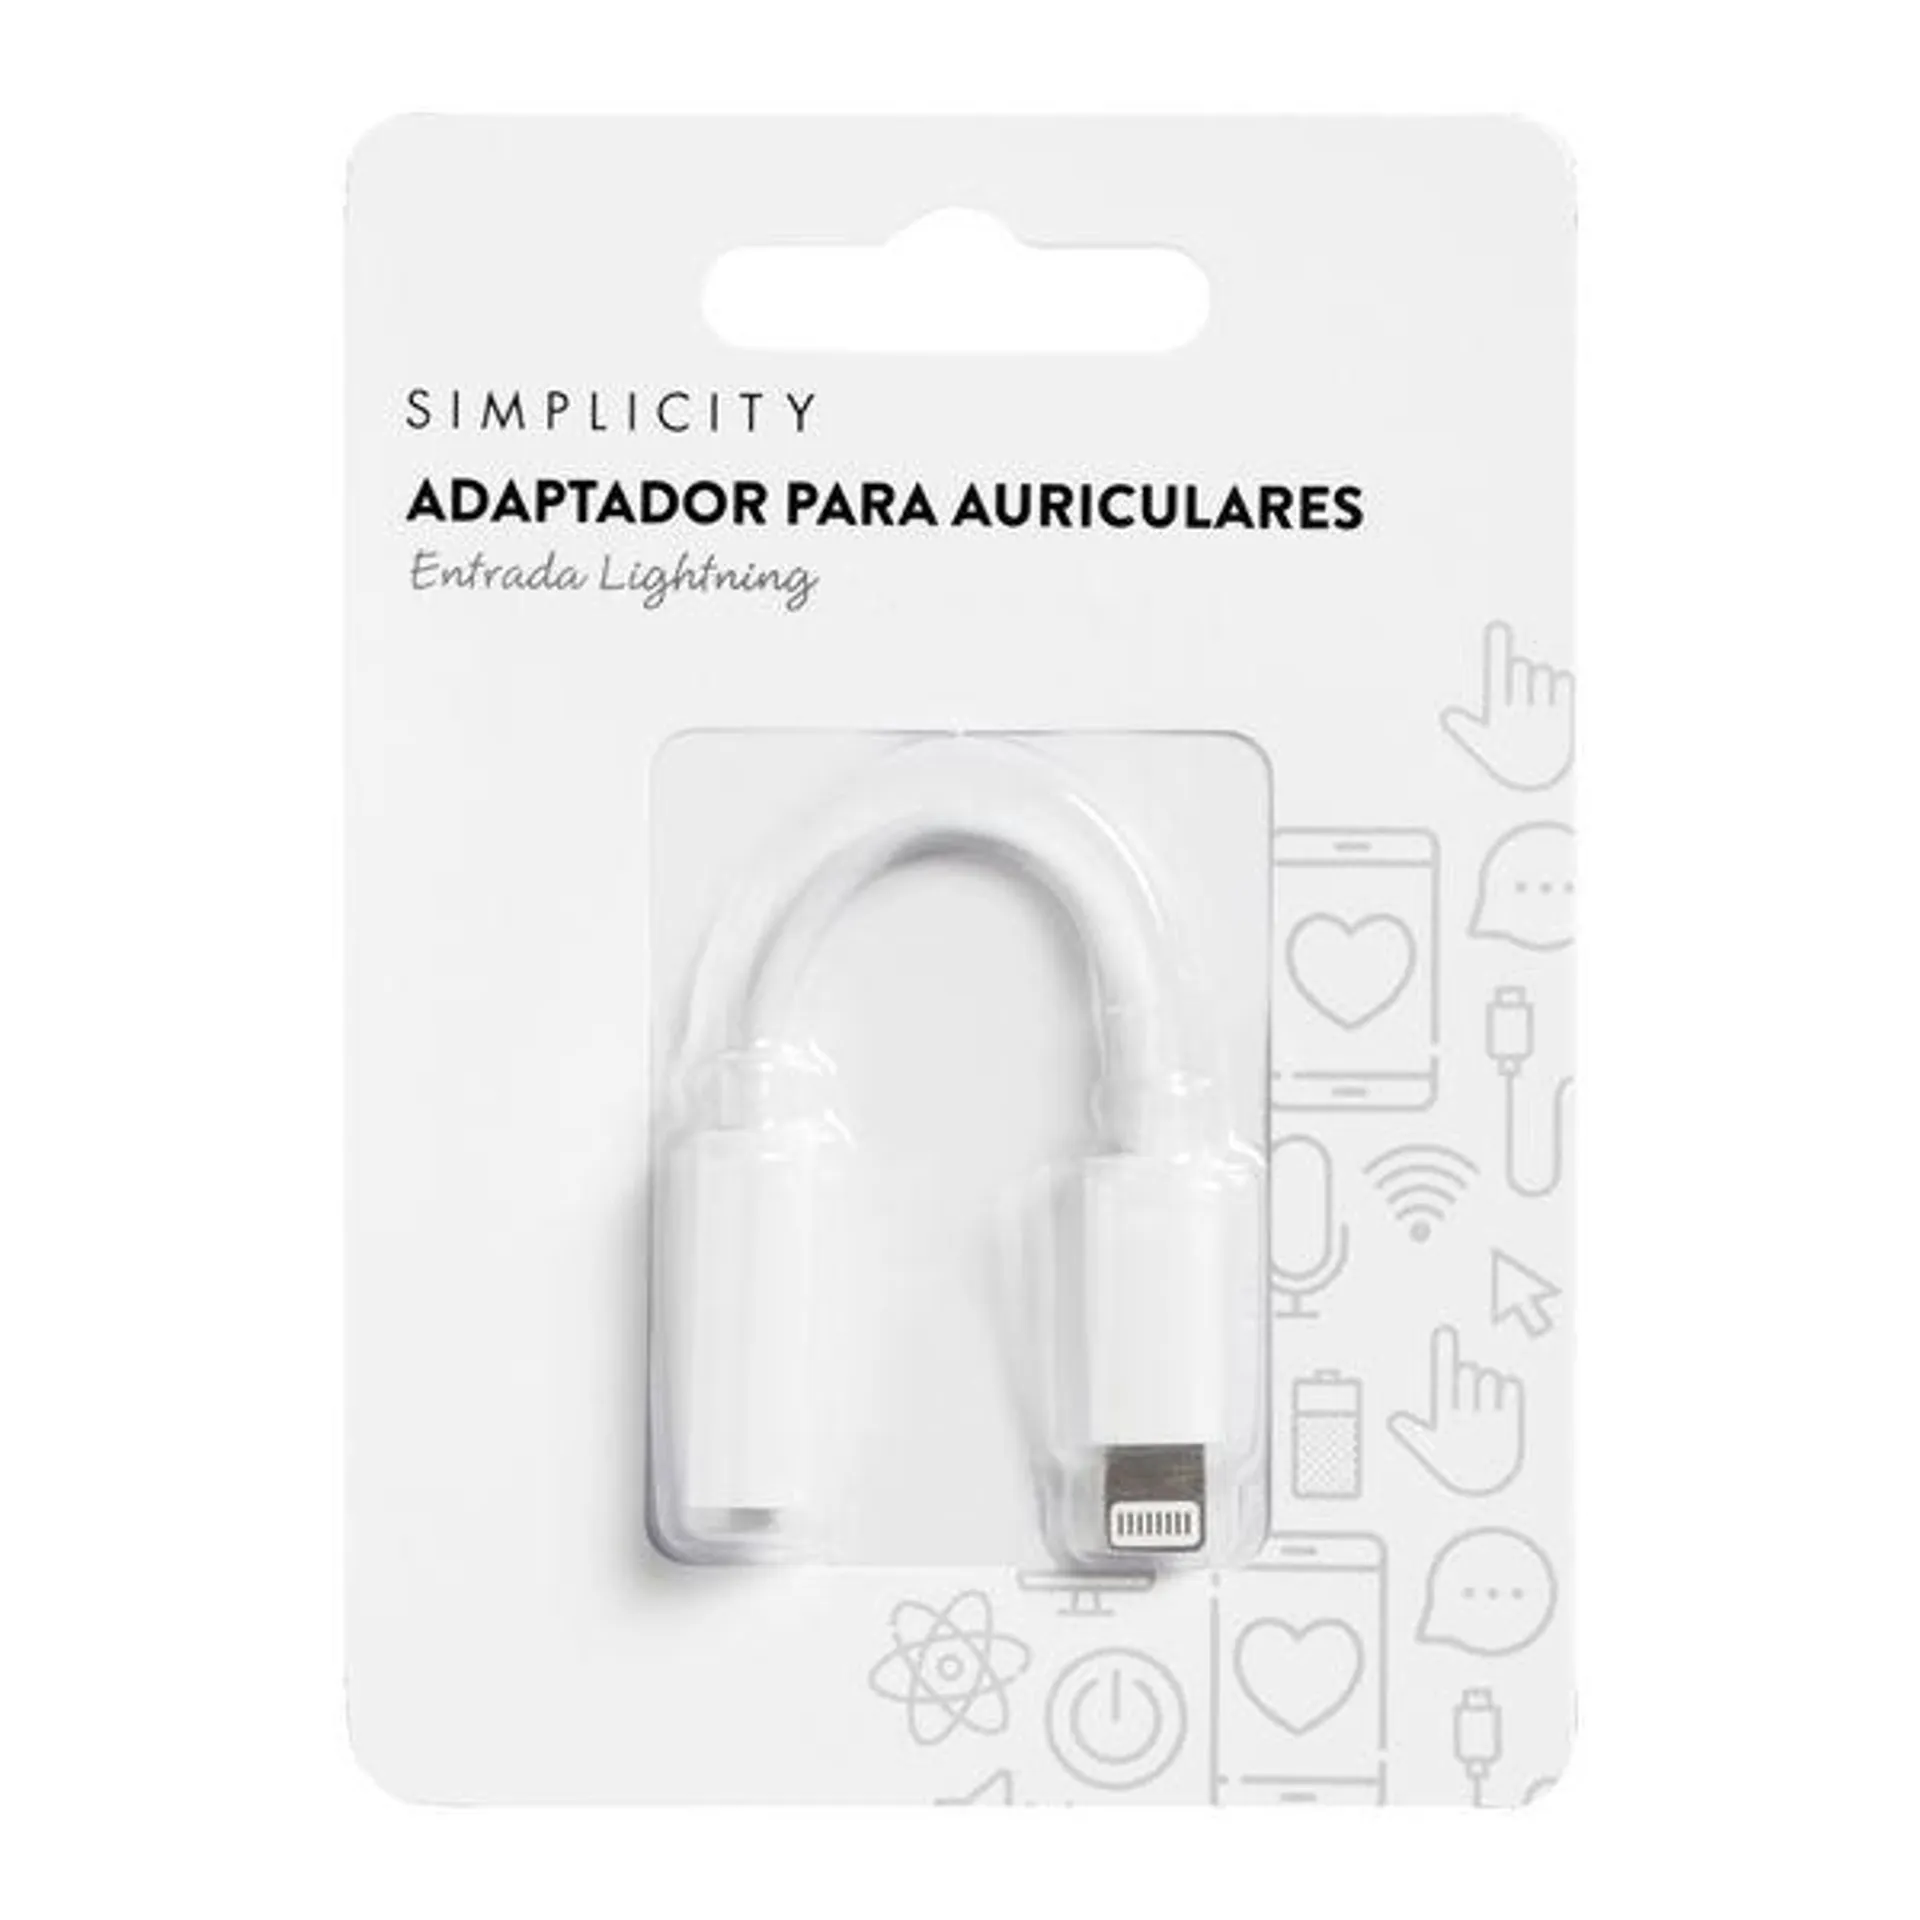 Adaptador para Auriculares Simplicity Entrada Lightning